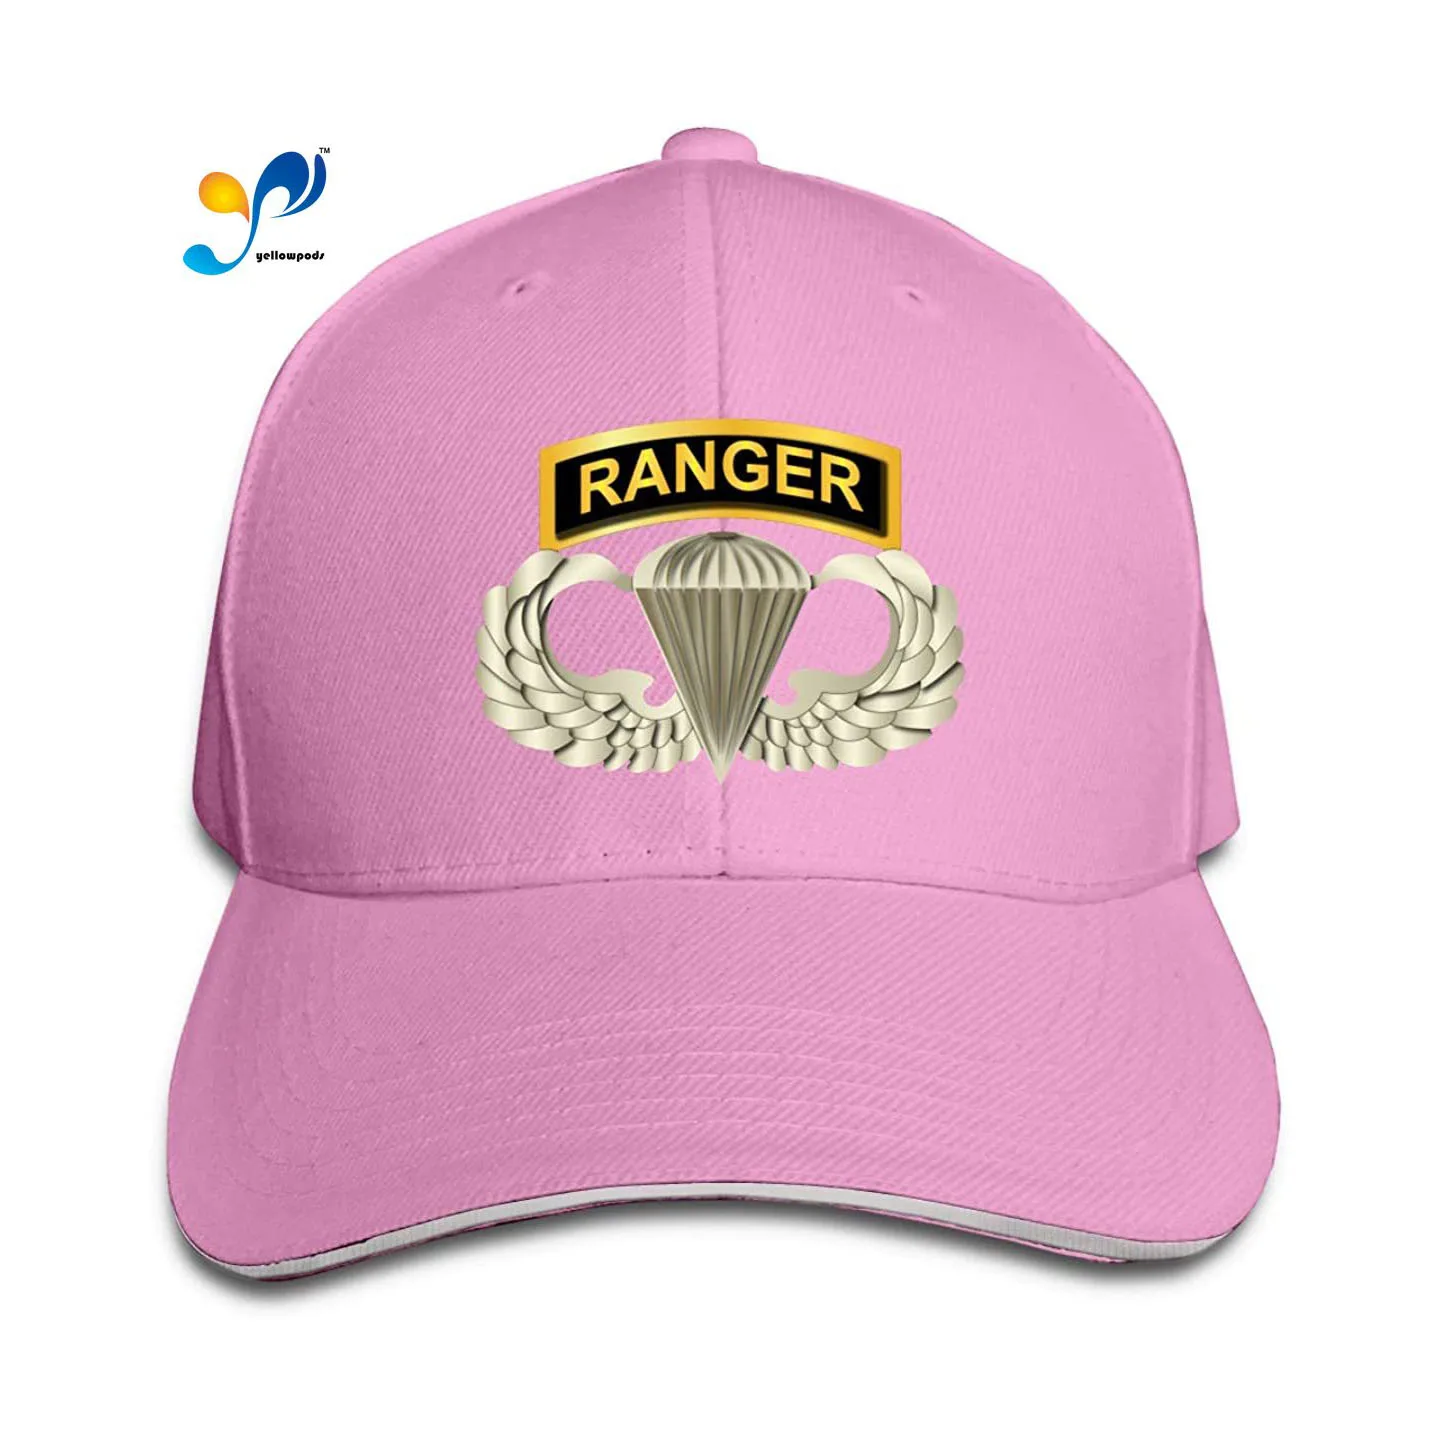 

Airborne Badge Ranger Tab Men's Girl's Classical Hat Fashionable Peak Cap Cricket Cap Moto Gp Baseball Cap